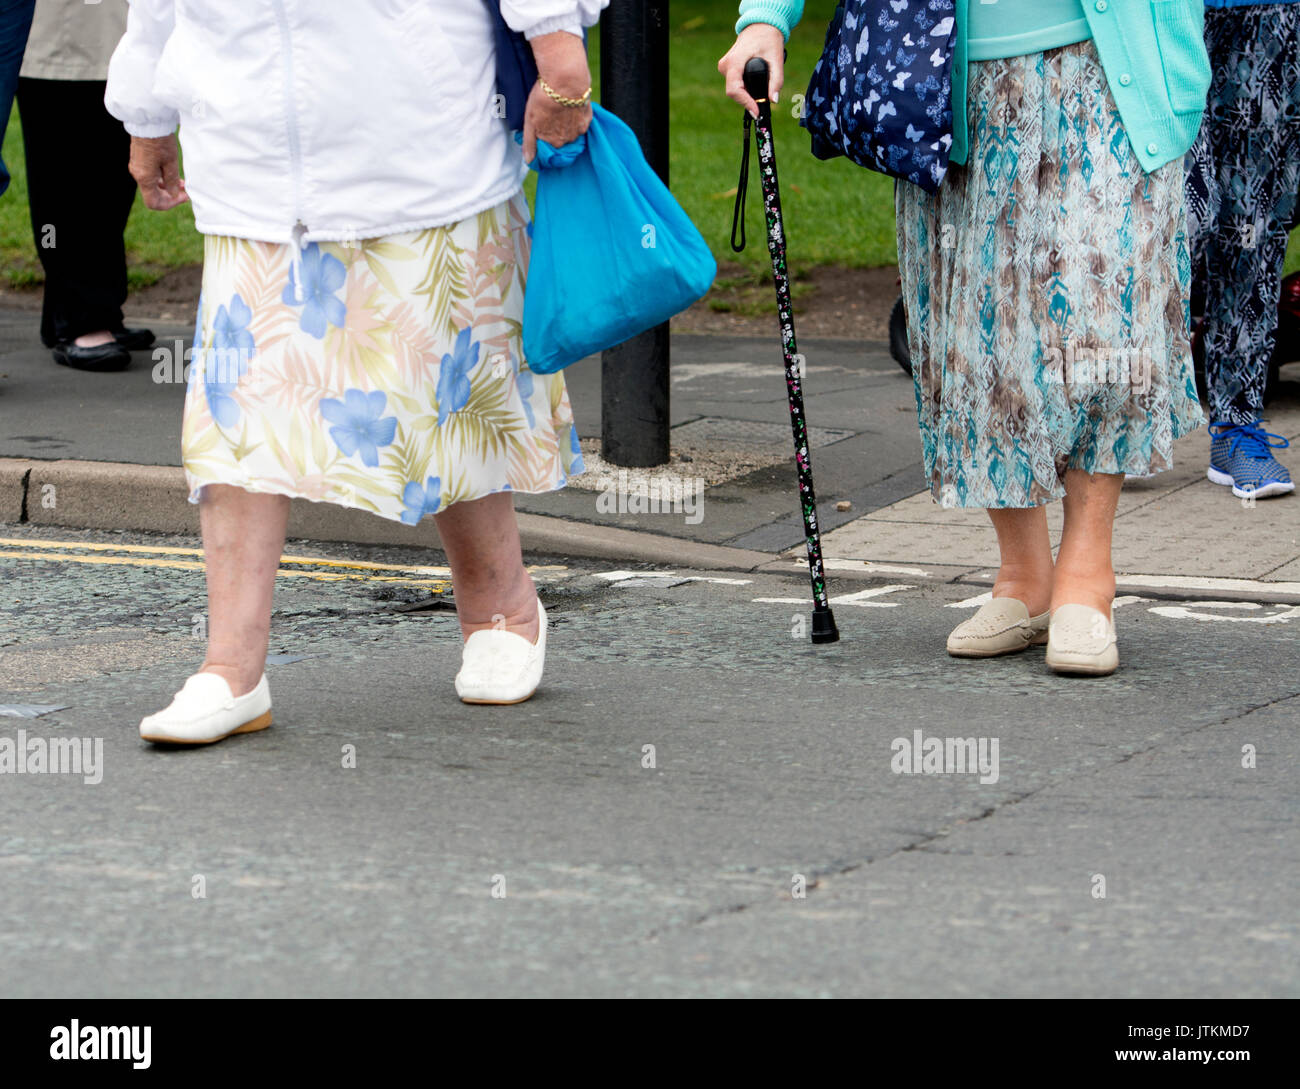 Two elderly women crossing a road at a pedestrian crossing, UK Stock Photo